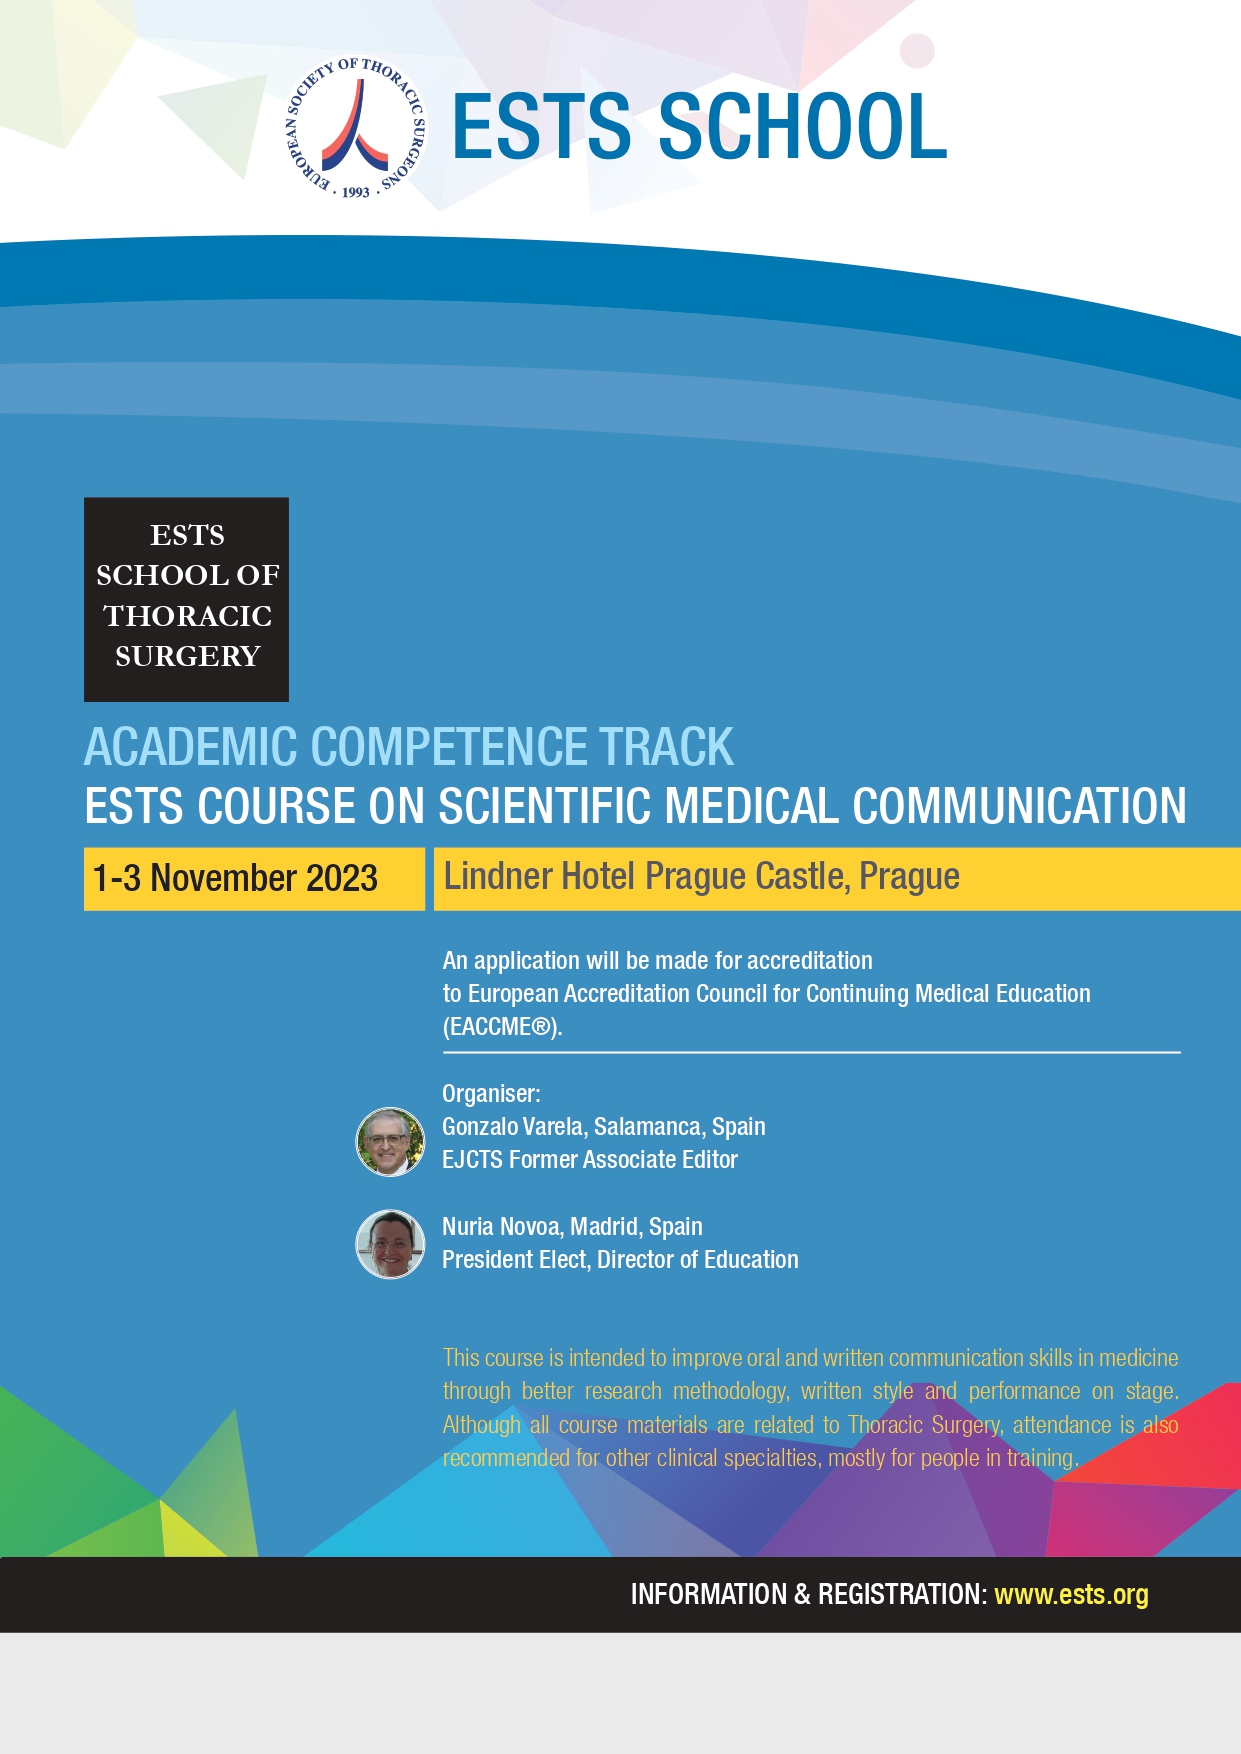 Registration Open for ESTS Course on Scientific Medical Communication image